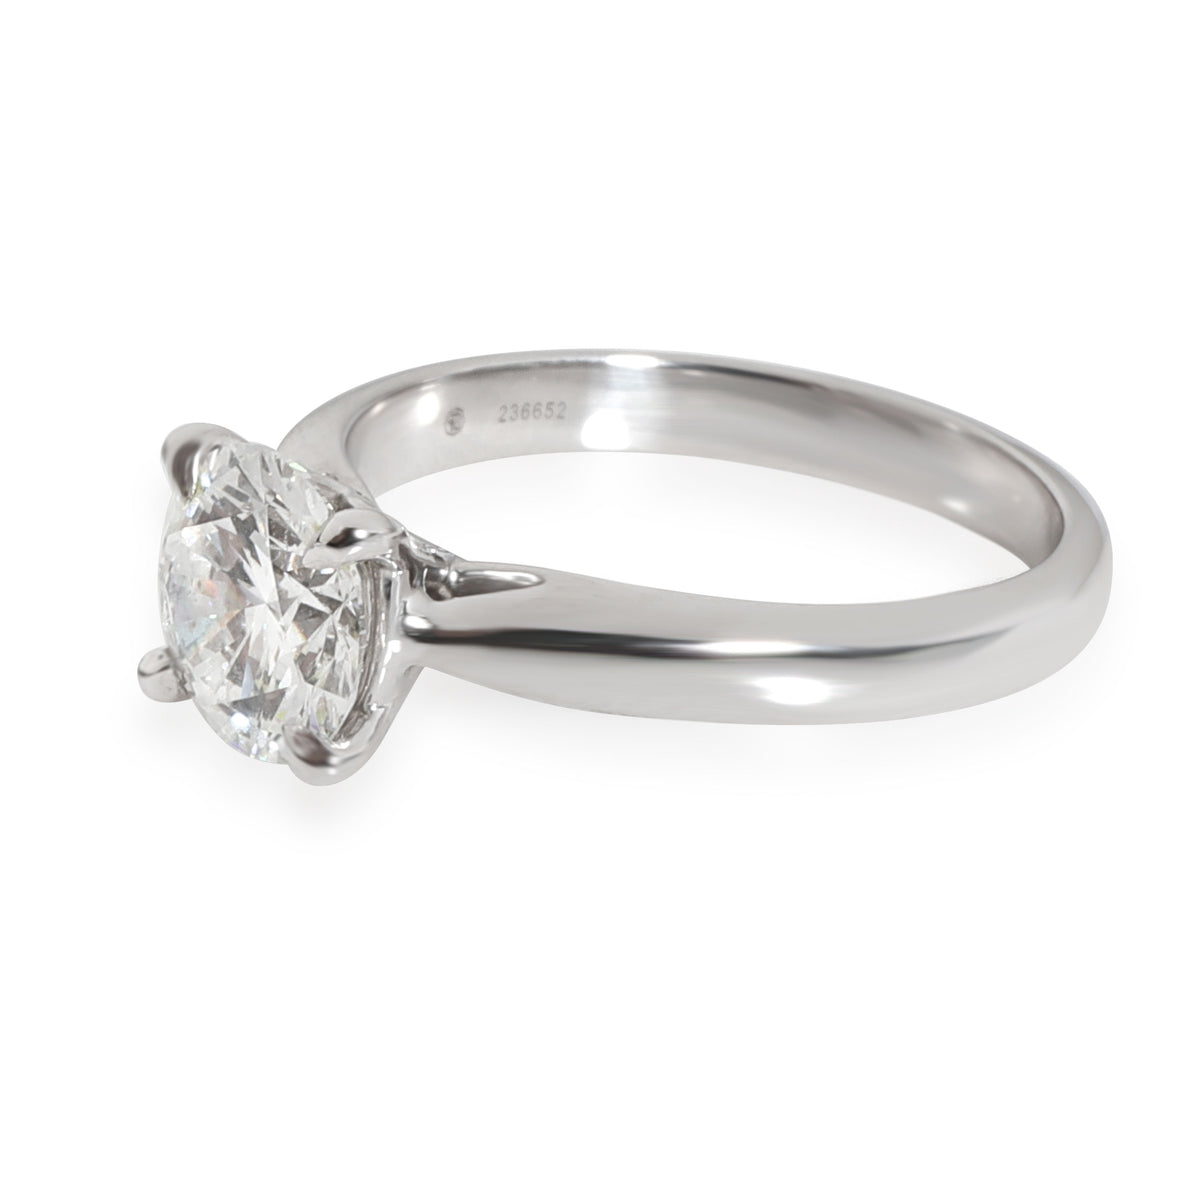 Ritani Diamond Engagement Ring in 14K White Gold/Platinum GIA E VVS2 1.43 CTW